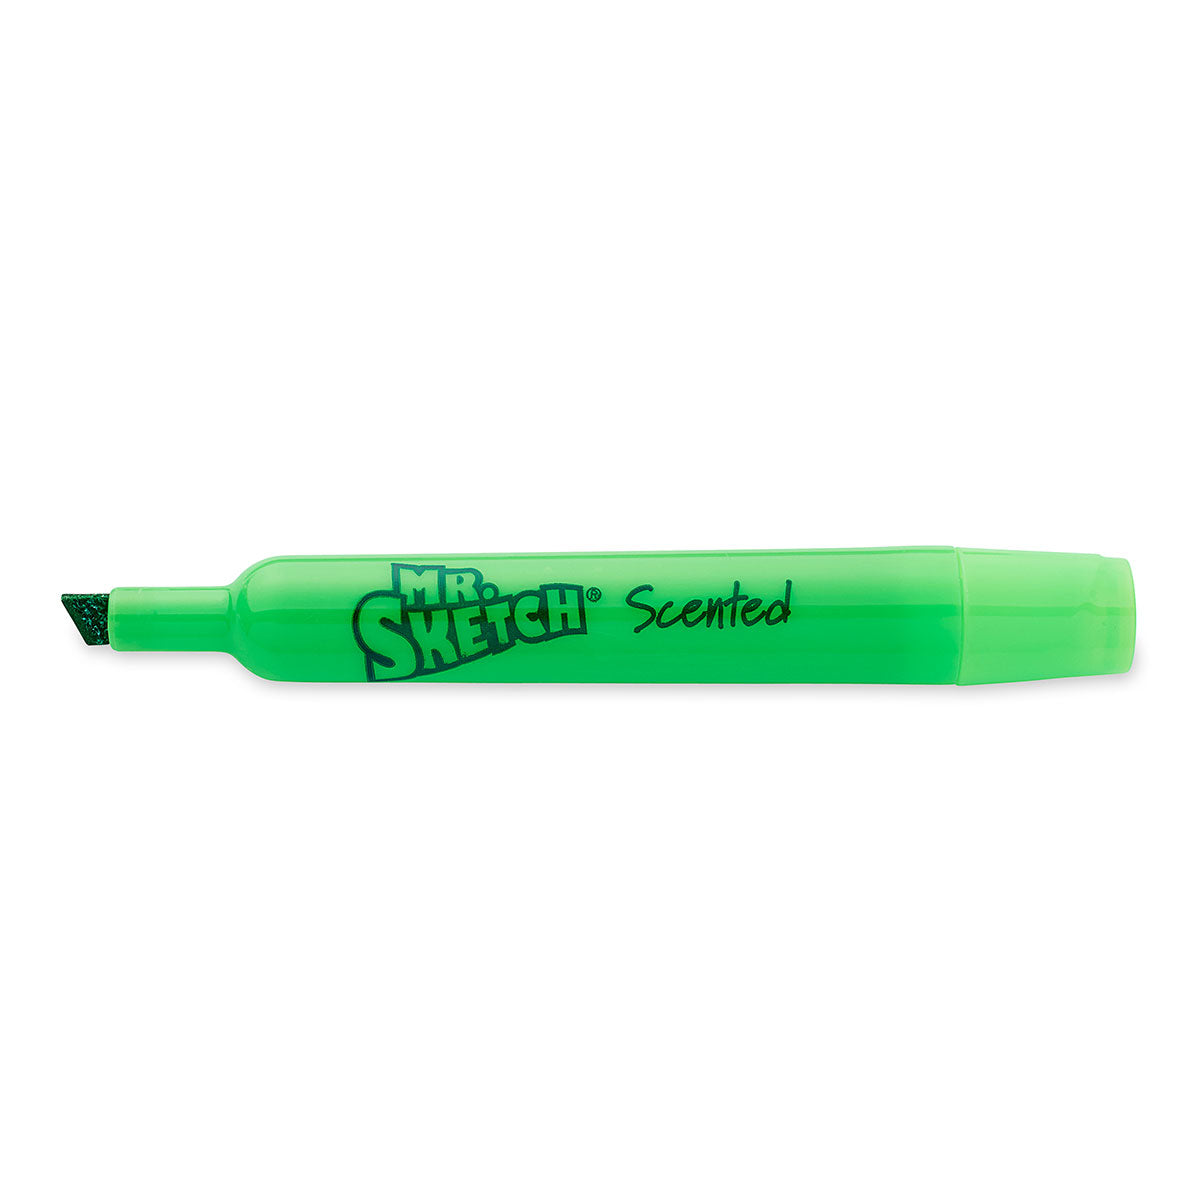 Mr. Sketch Mint Scented Marker Light GreenPens and Pencils